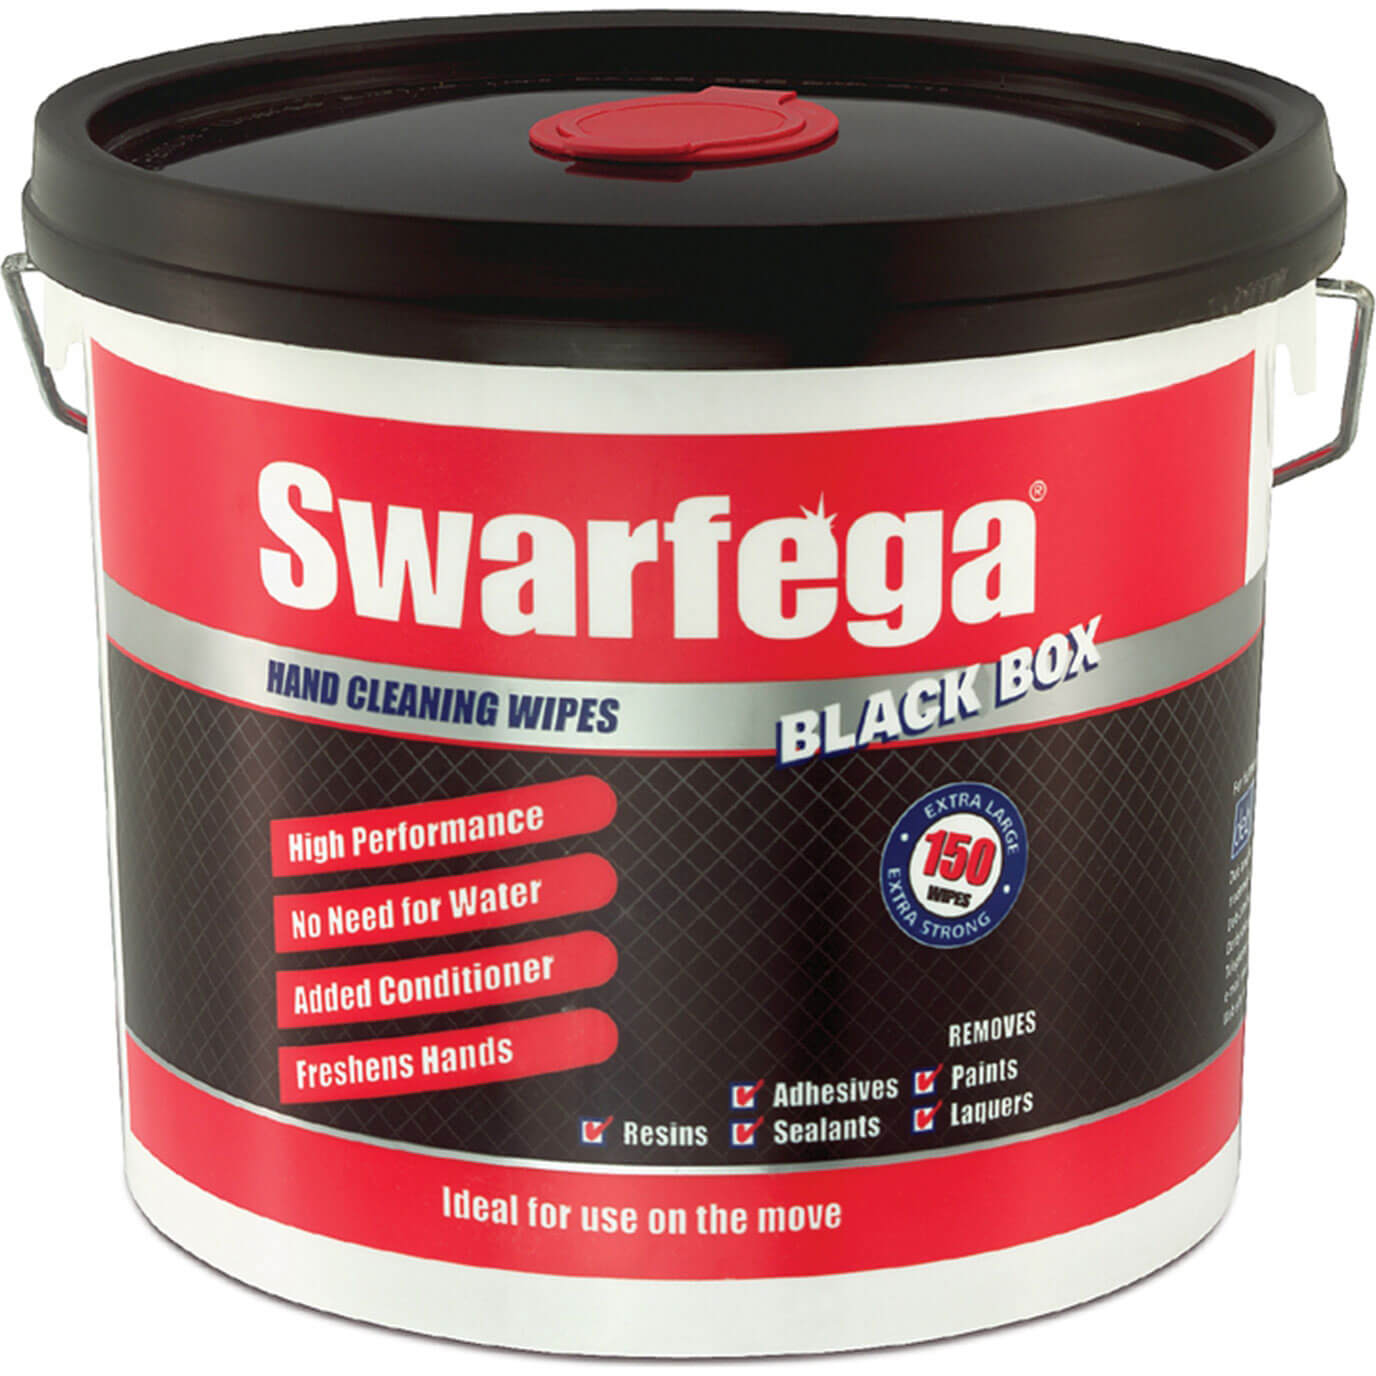 Image of Swarfega Black Box Heavy Duty Trade Hand Wipes Pack of 150